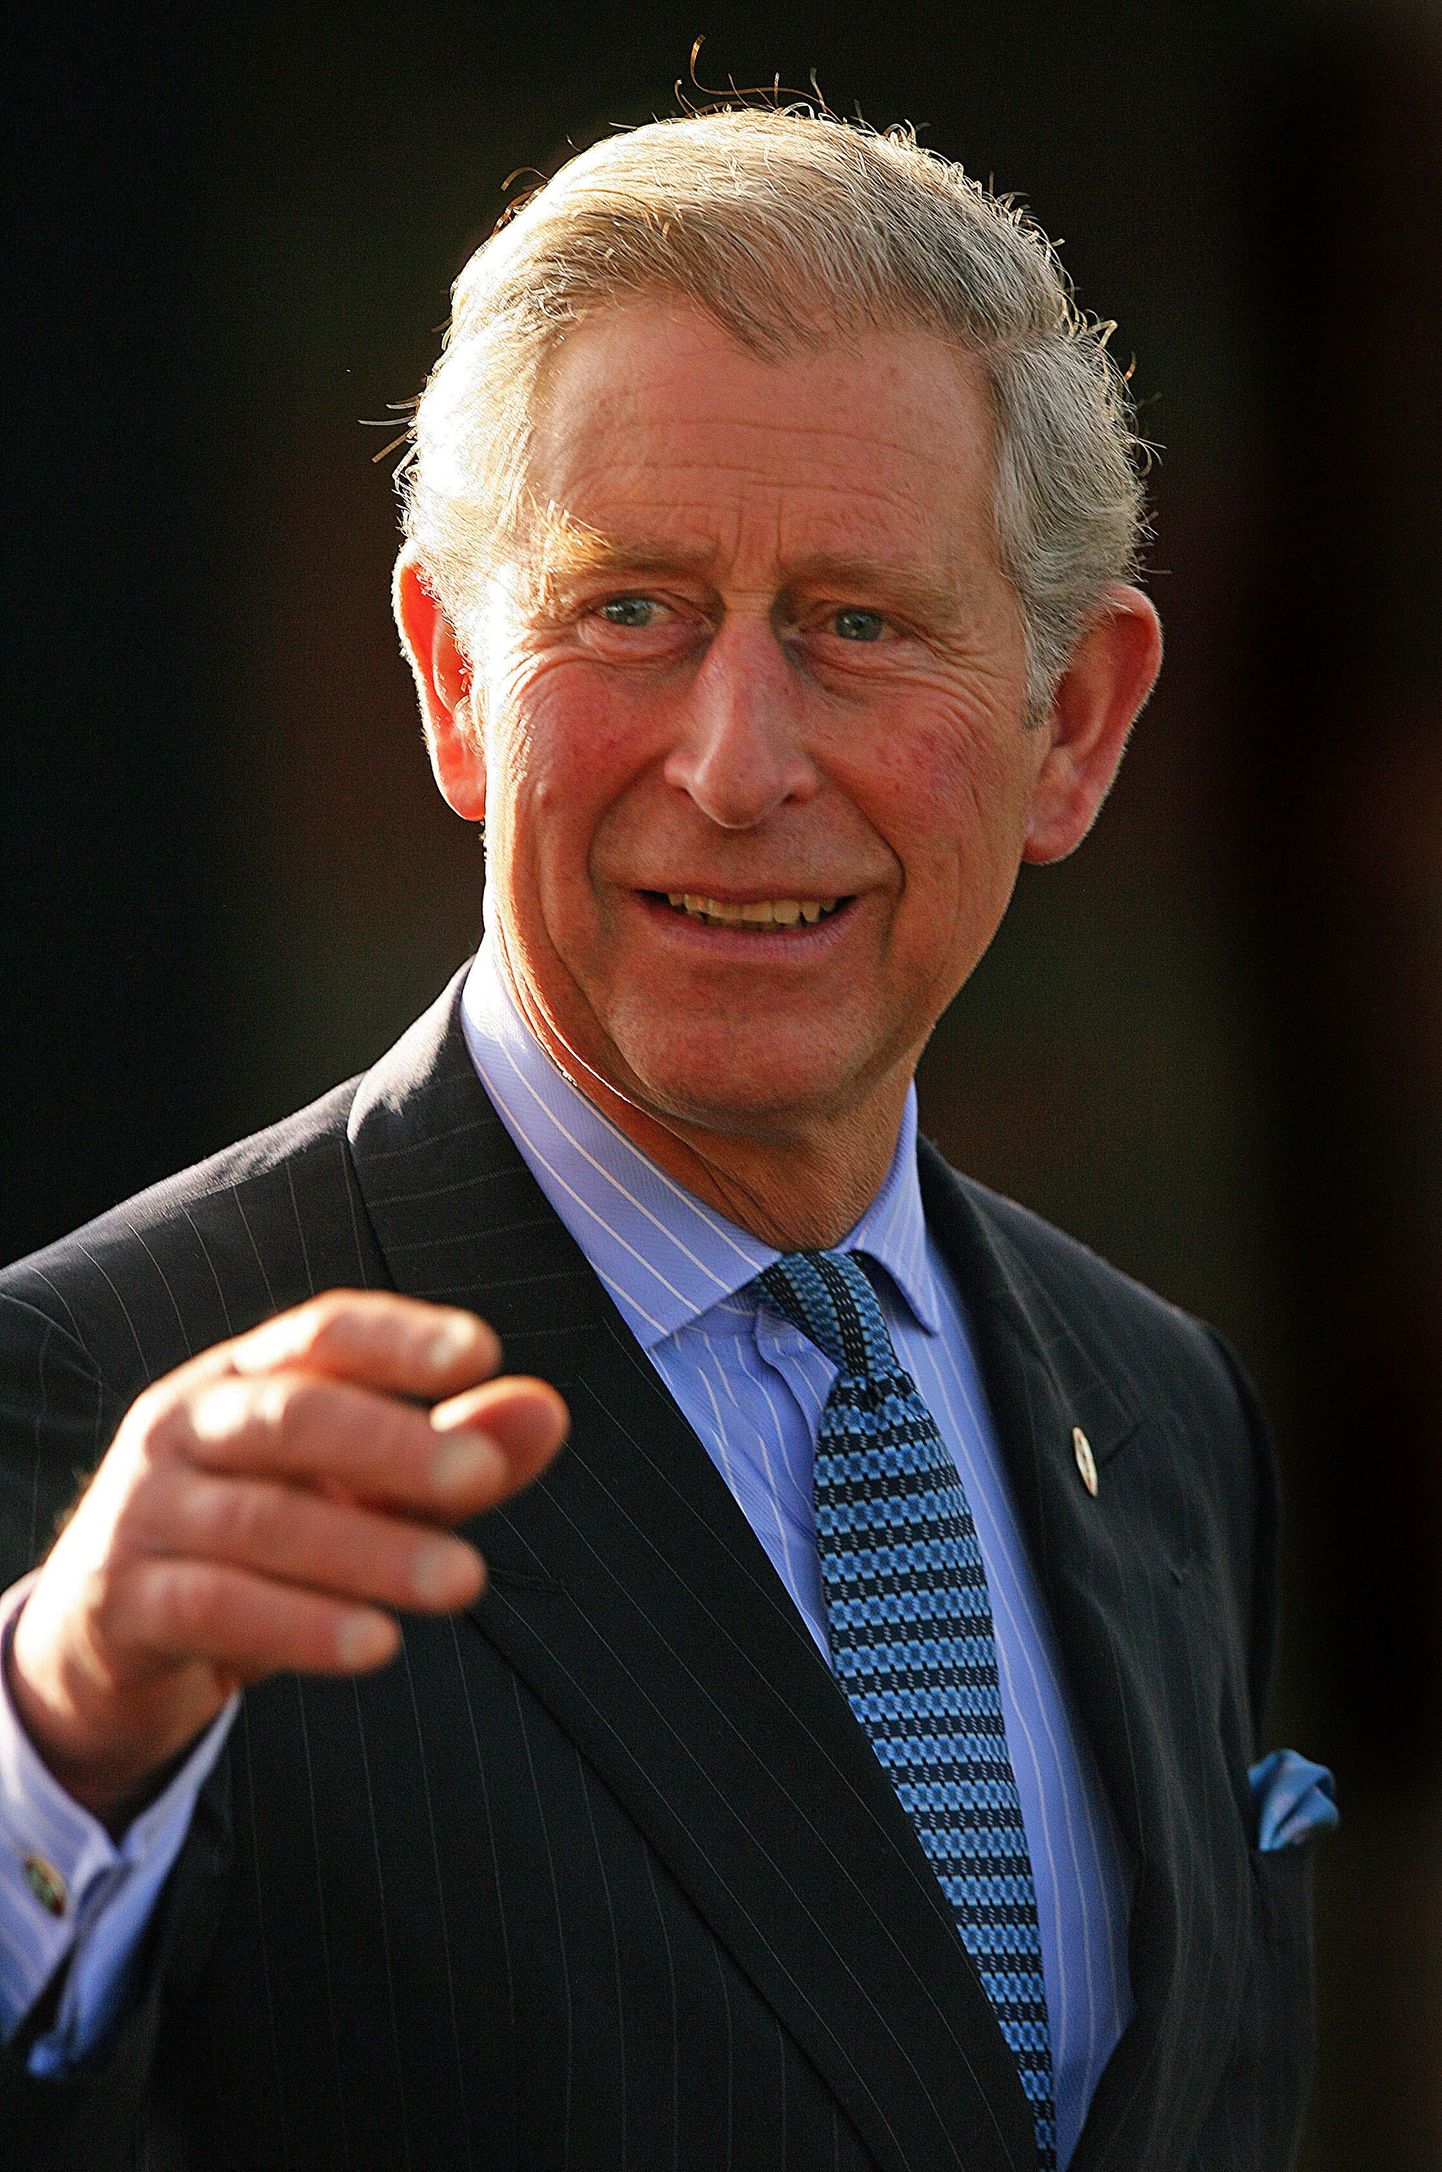 Walesi prints Charles